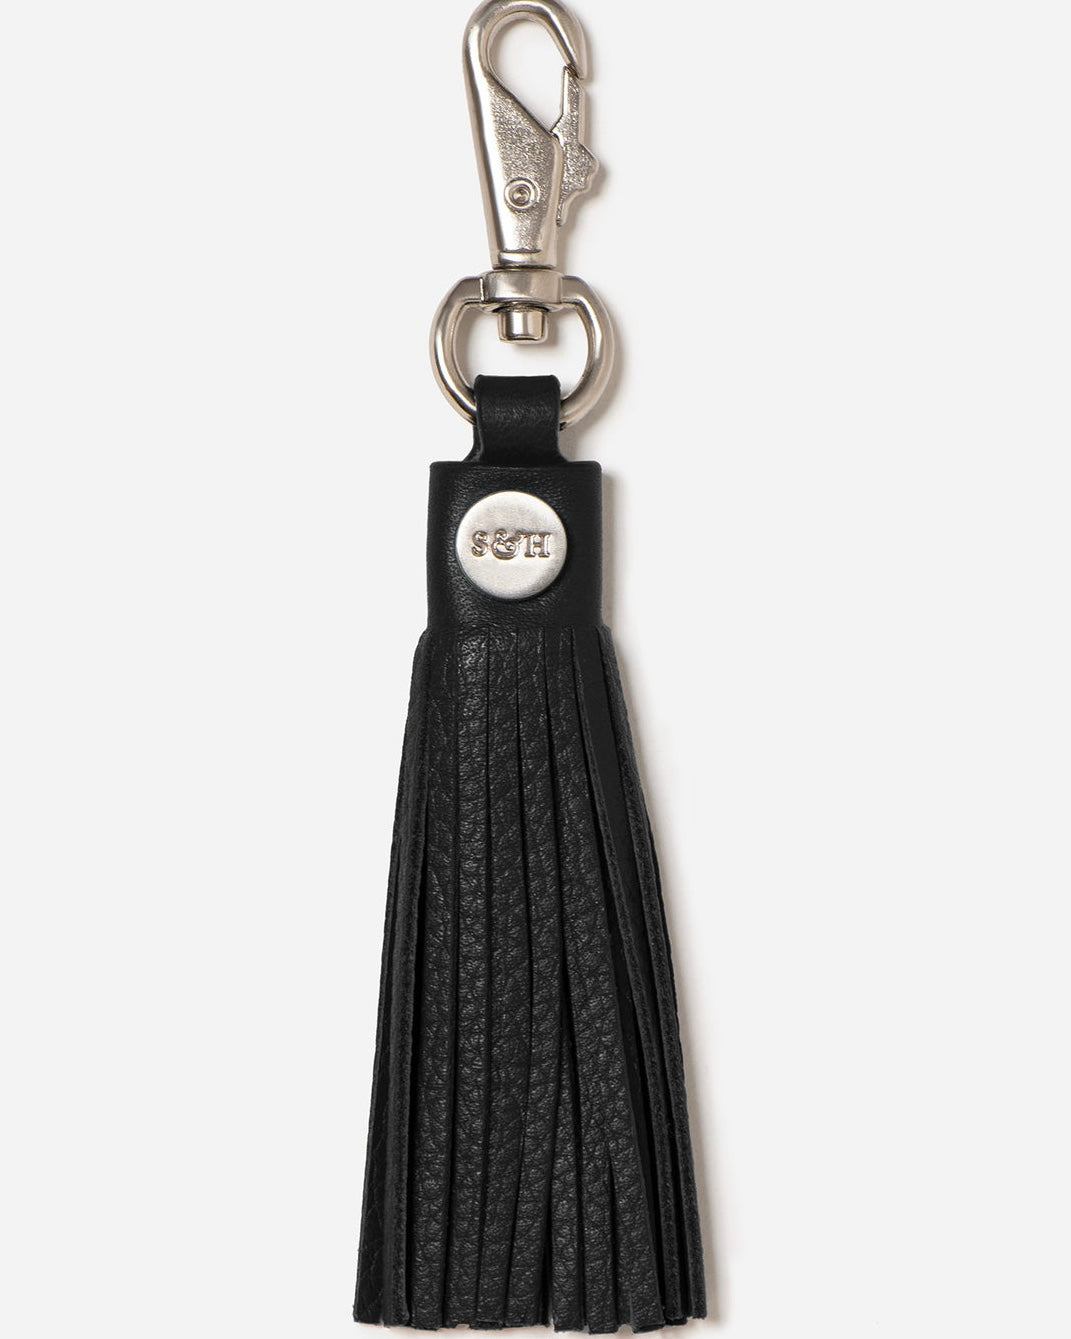 Leather Tassel/Key Ring (Black)